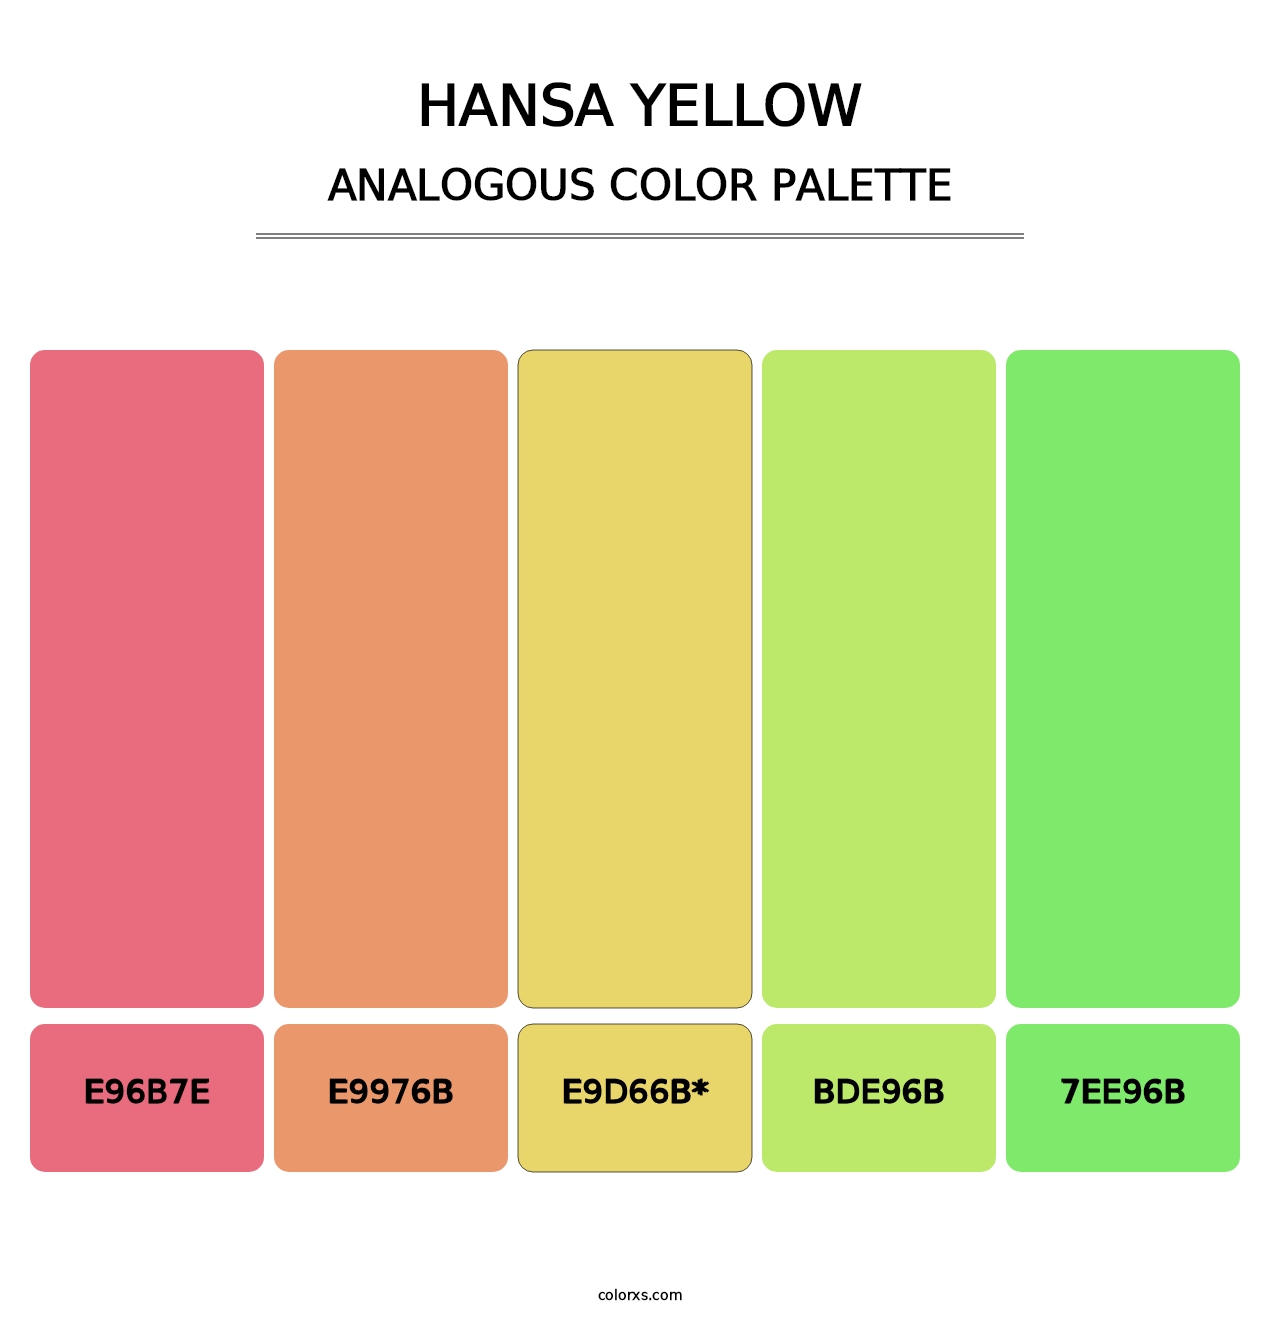 Hansa Yellow - Analogous Color Palette